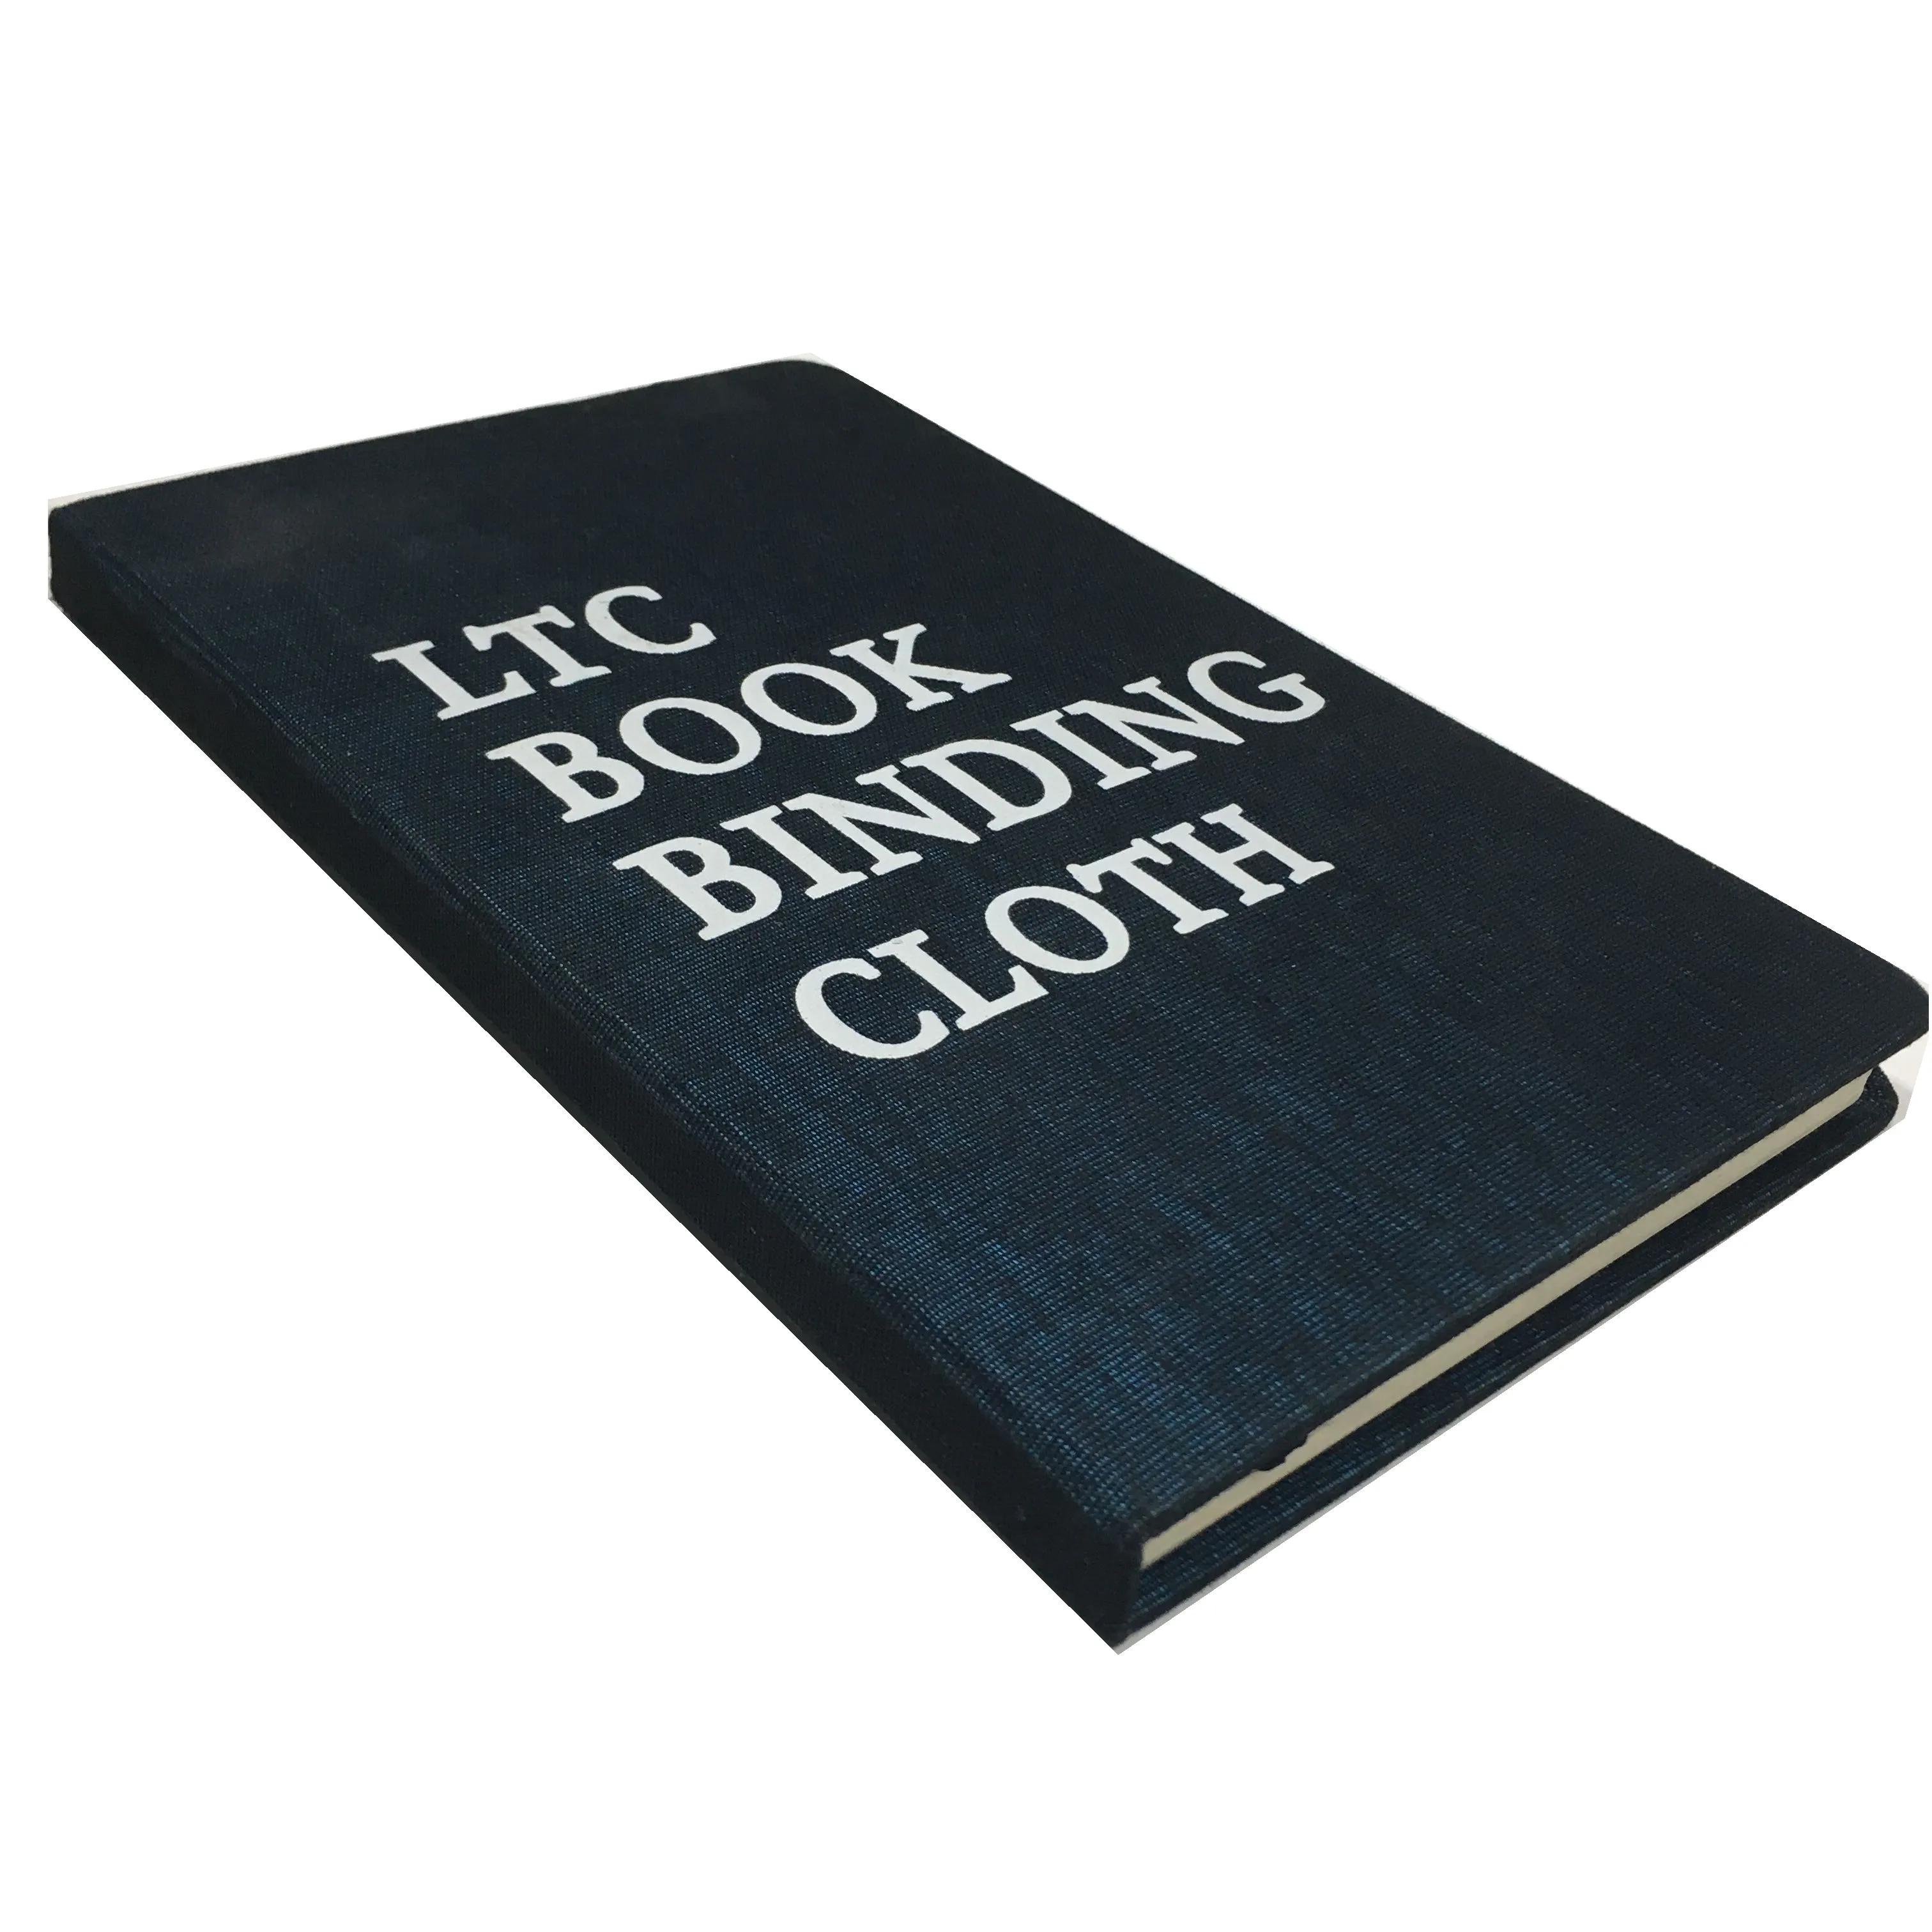 Book cloth, hardcover bookcloth, book binding cloth, LTC book cover  cloth, cover material, binding textiles